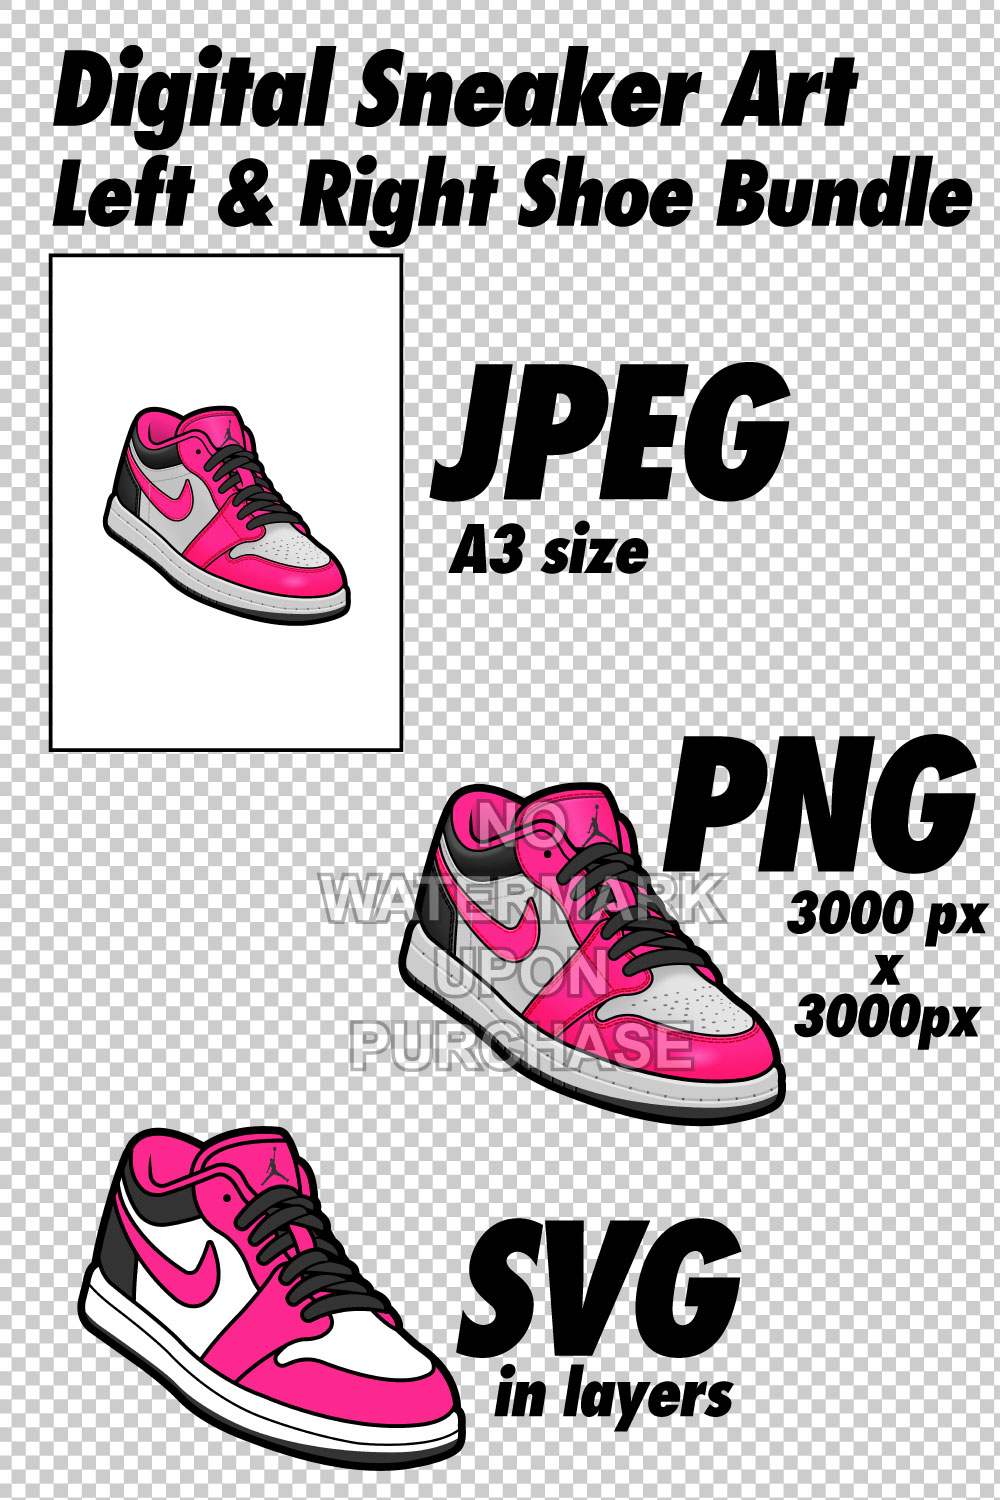 Air Jordan 1 Low Fierce Pink JPEG PNG SVG Sneaker Art right & left shoe bundle pinterest preview image.